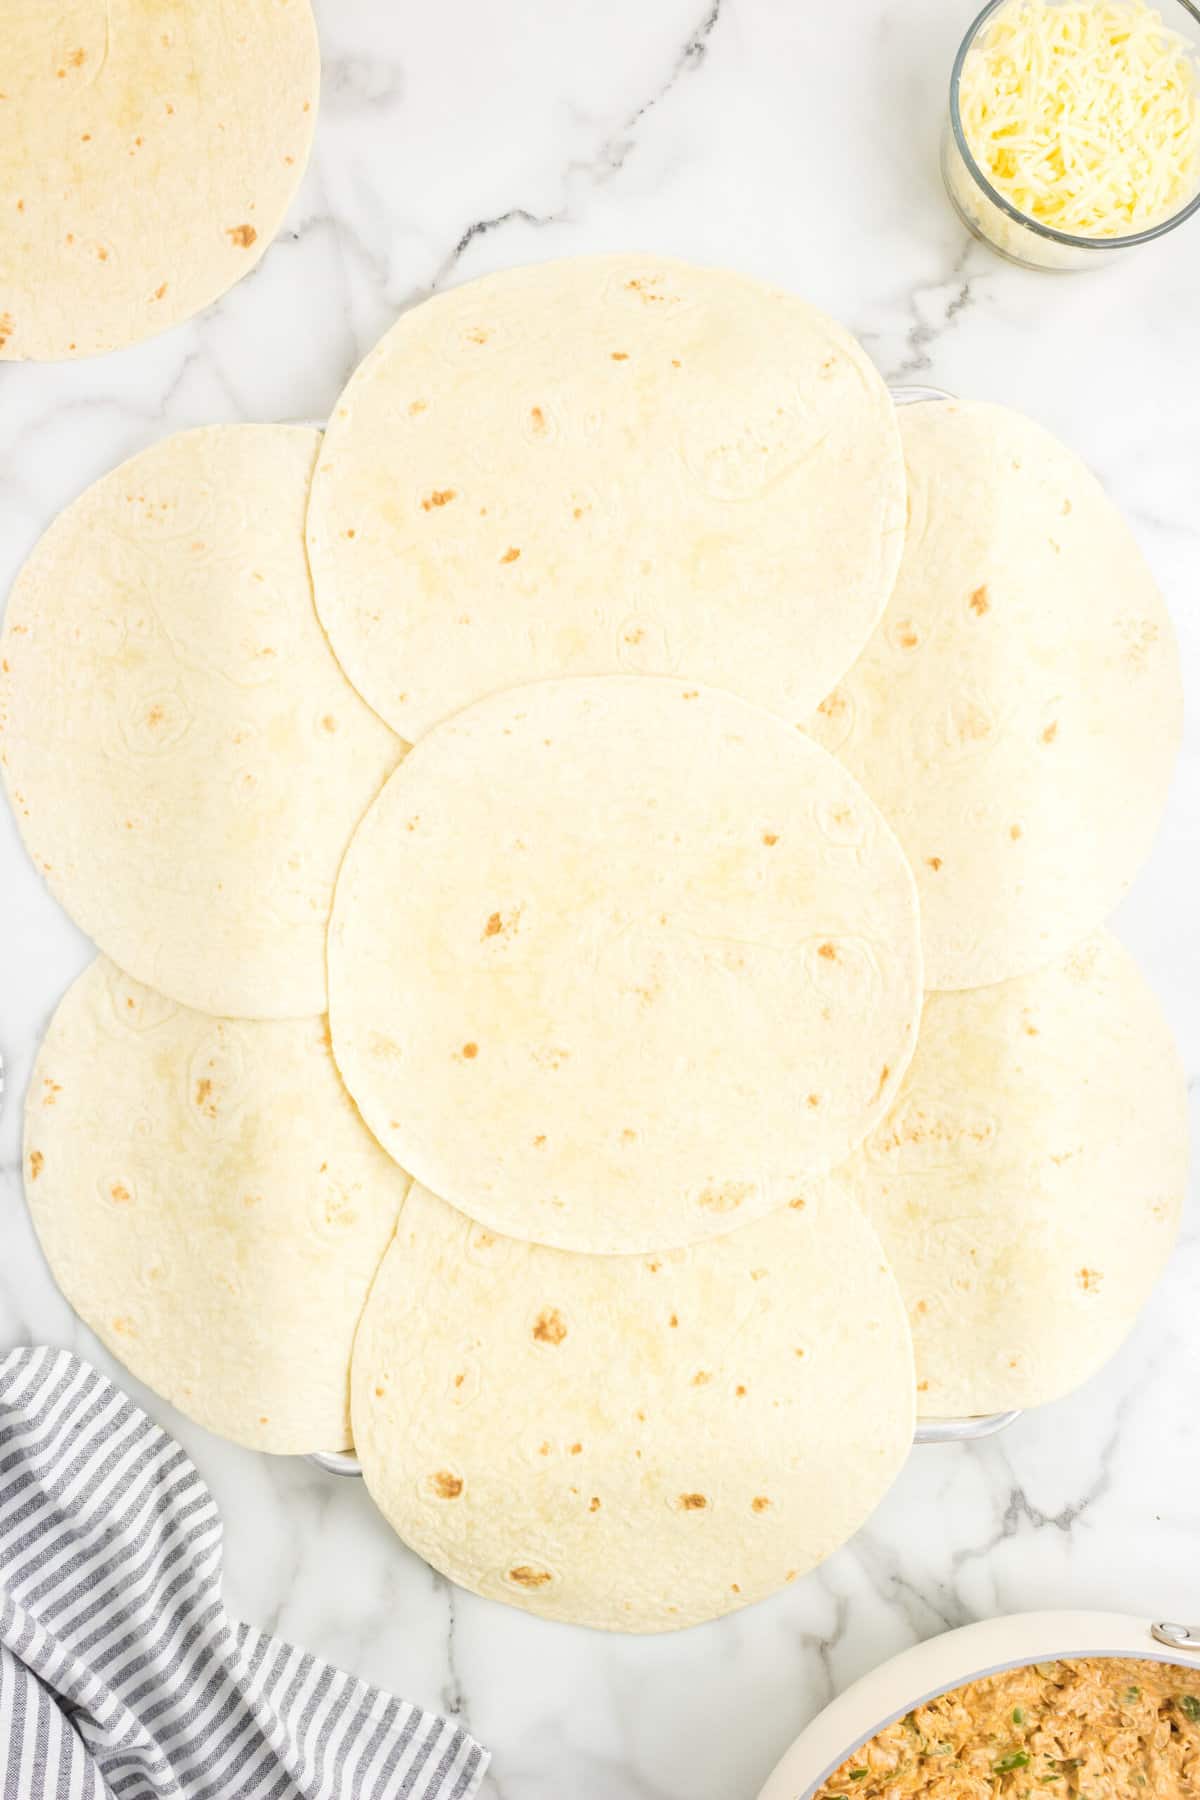 Adding Center Tortilla to Layer for Sheet Pan Quesadillas Recipe